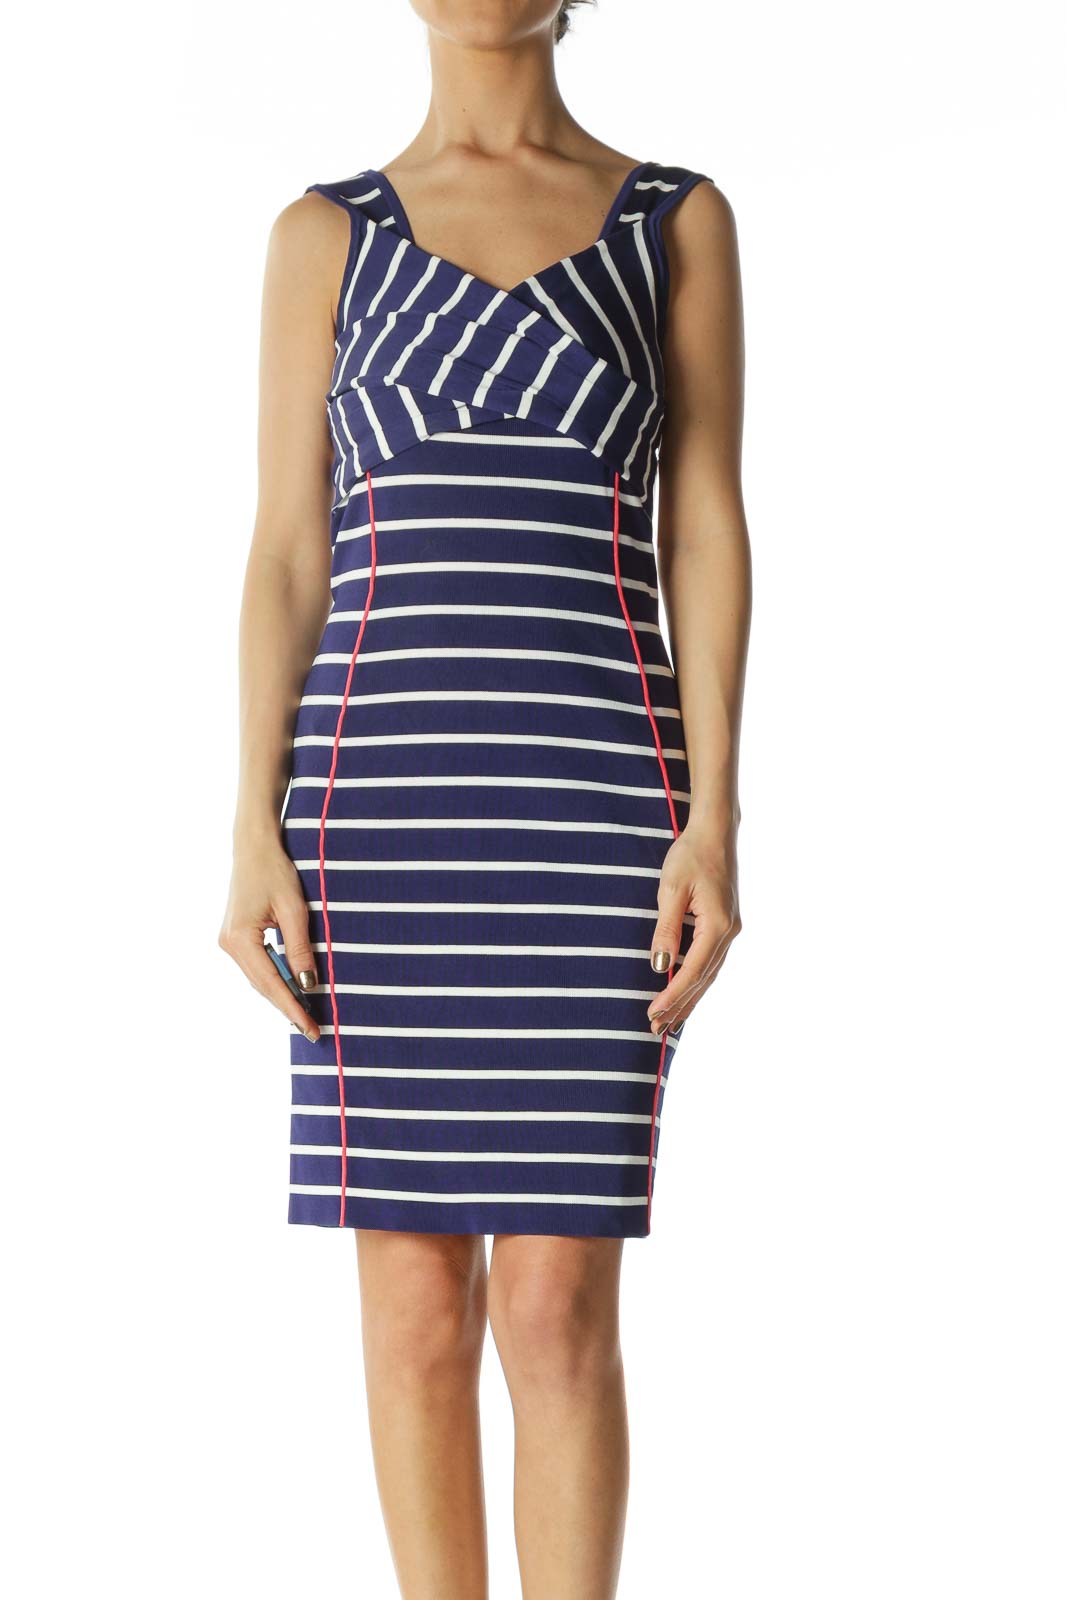 Blue/White/Pink Striped Wrap-Detail Stretch Dress Front